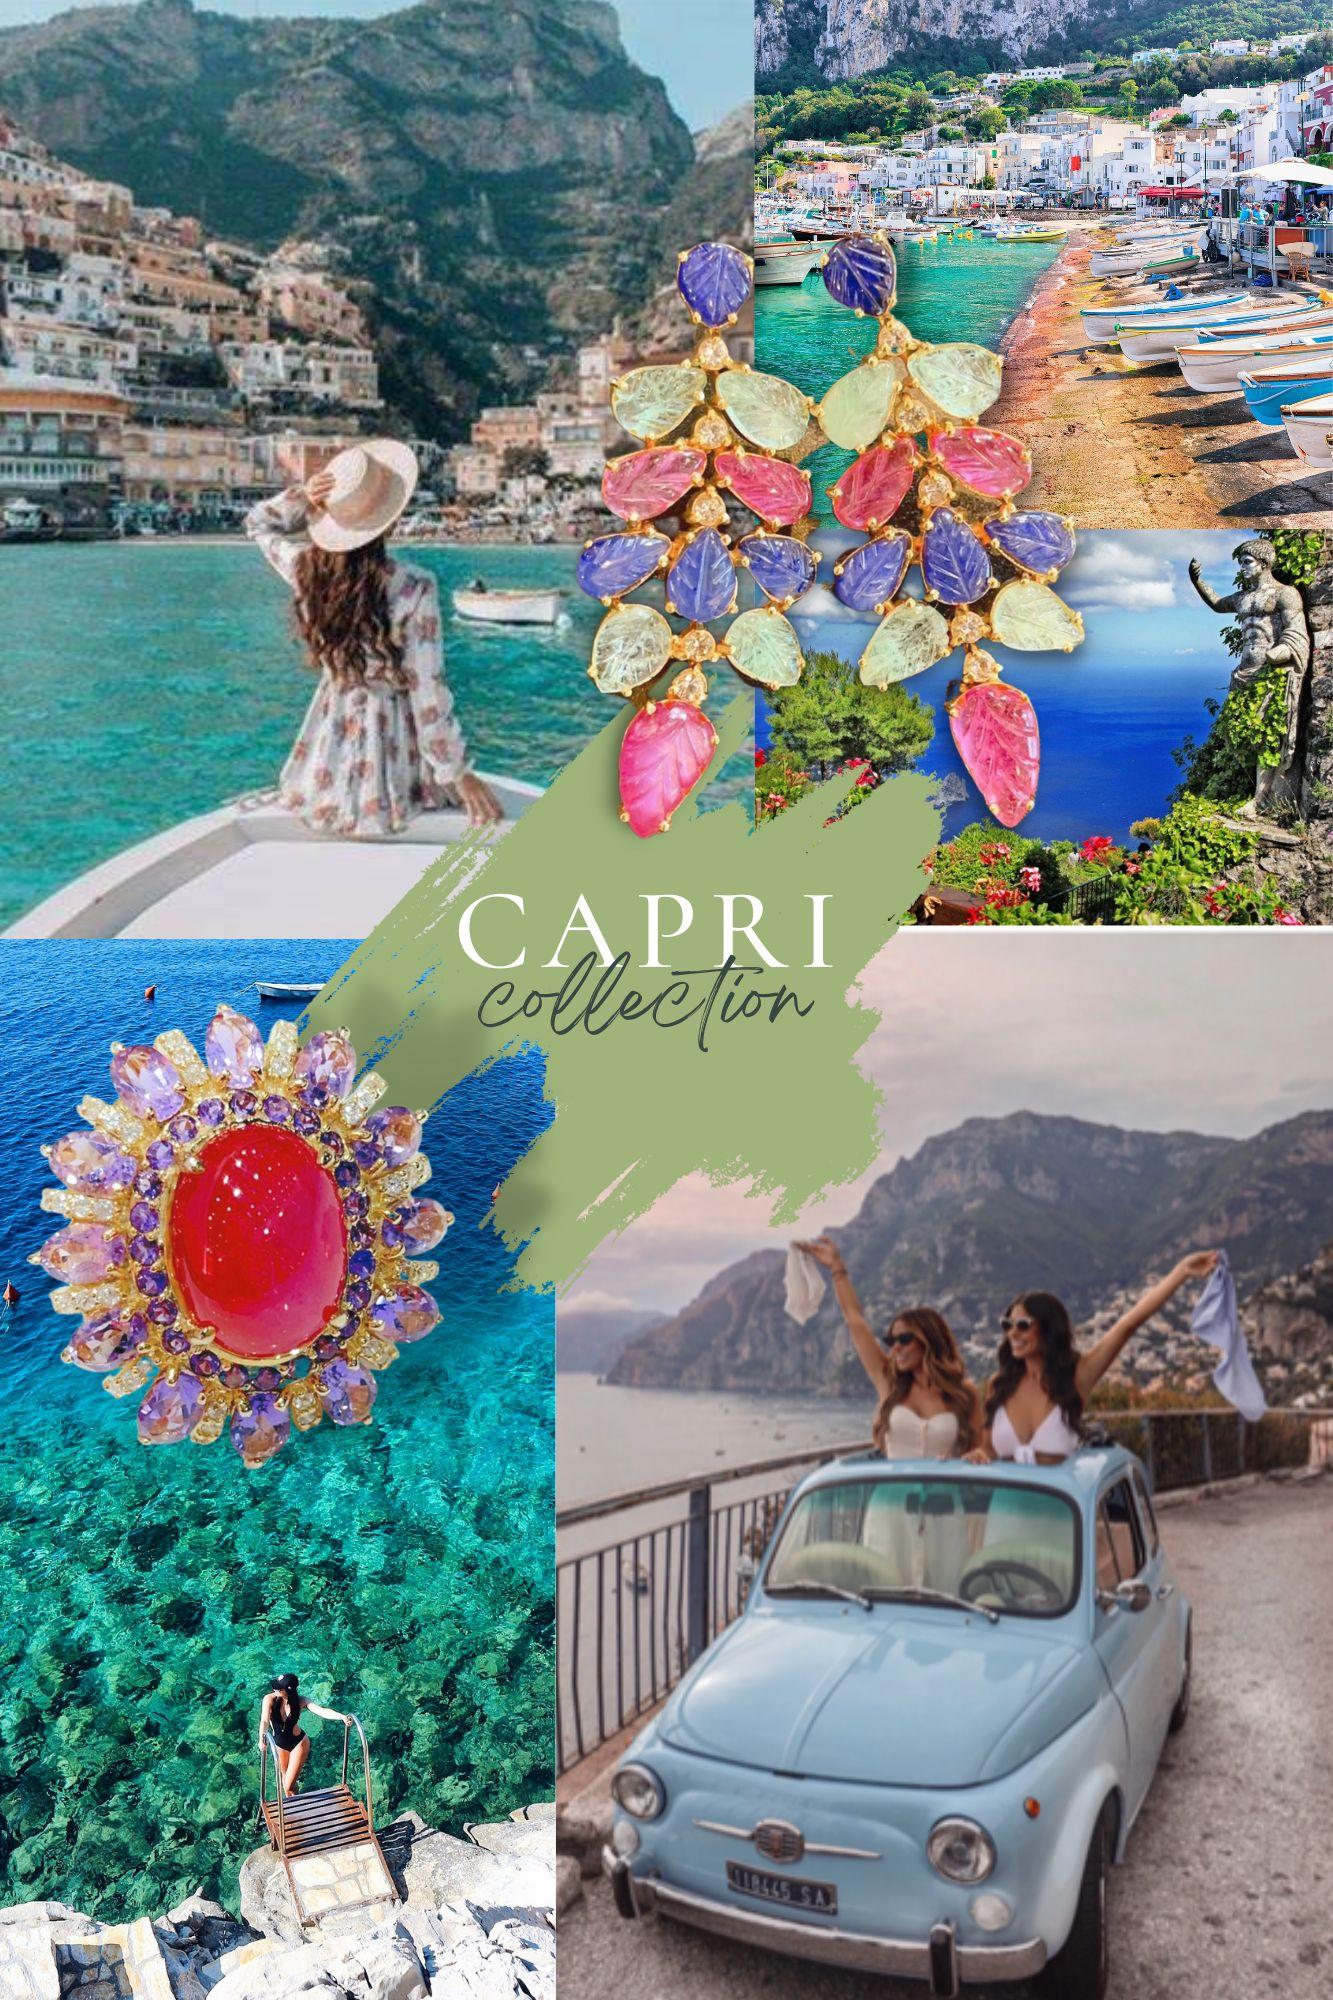 Brilliant Cut Bochic “Capri” Black Pearl & Emerald / Sapphire Cocktail Ring Set in 22k Gold